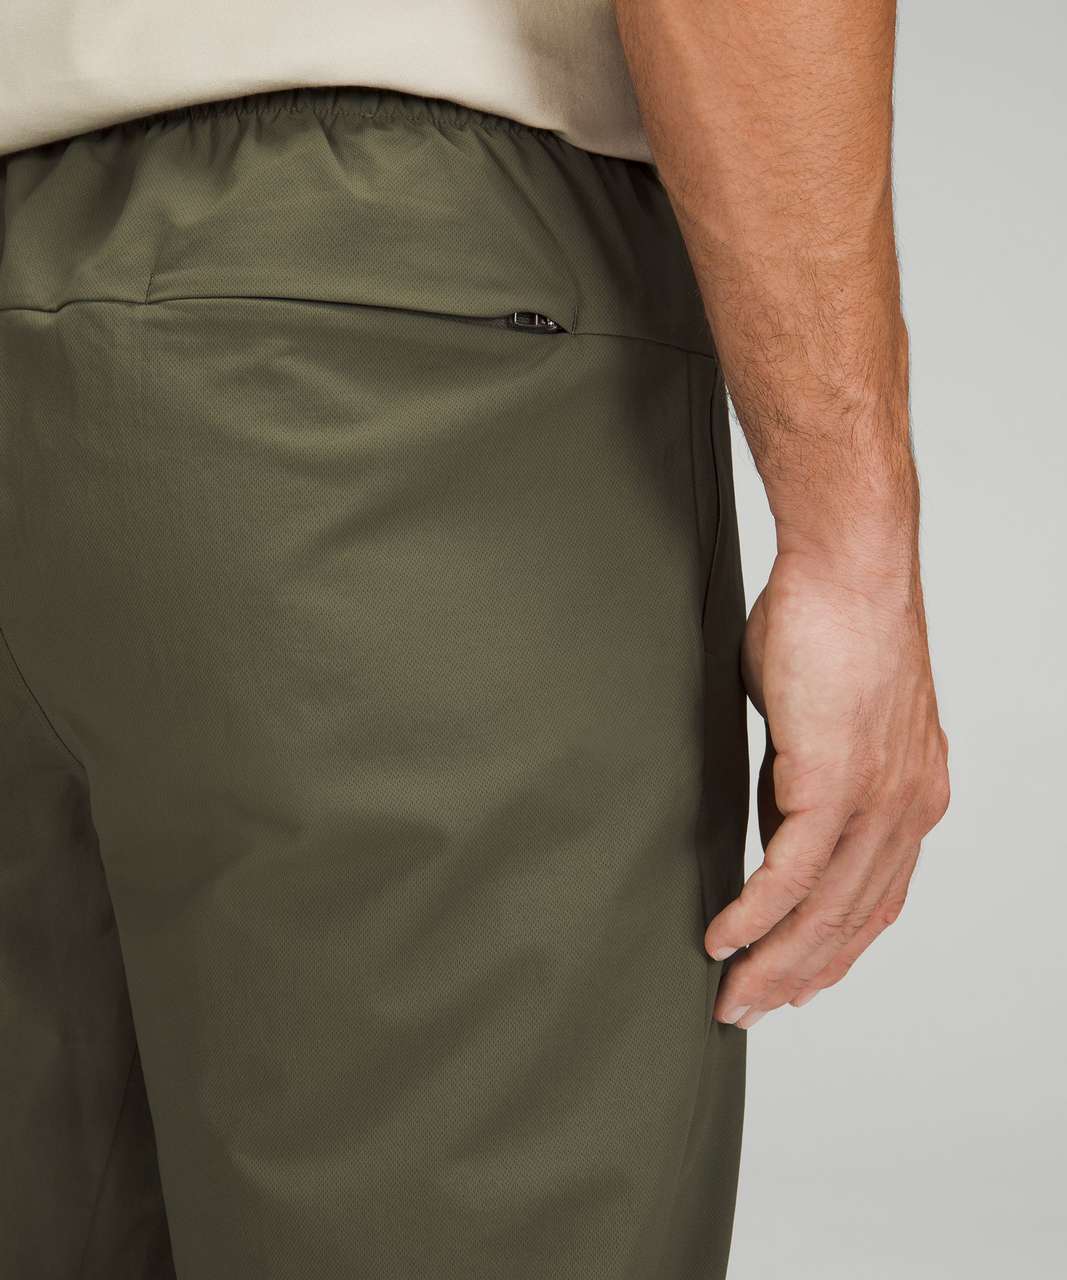 Lululemon New Venture Trouser *Pique Fabric - Carob Brown